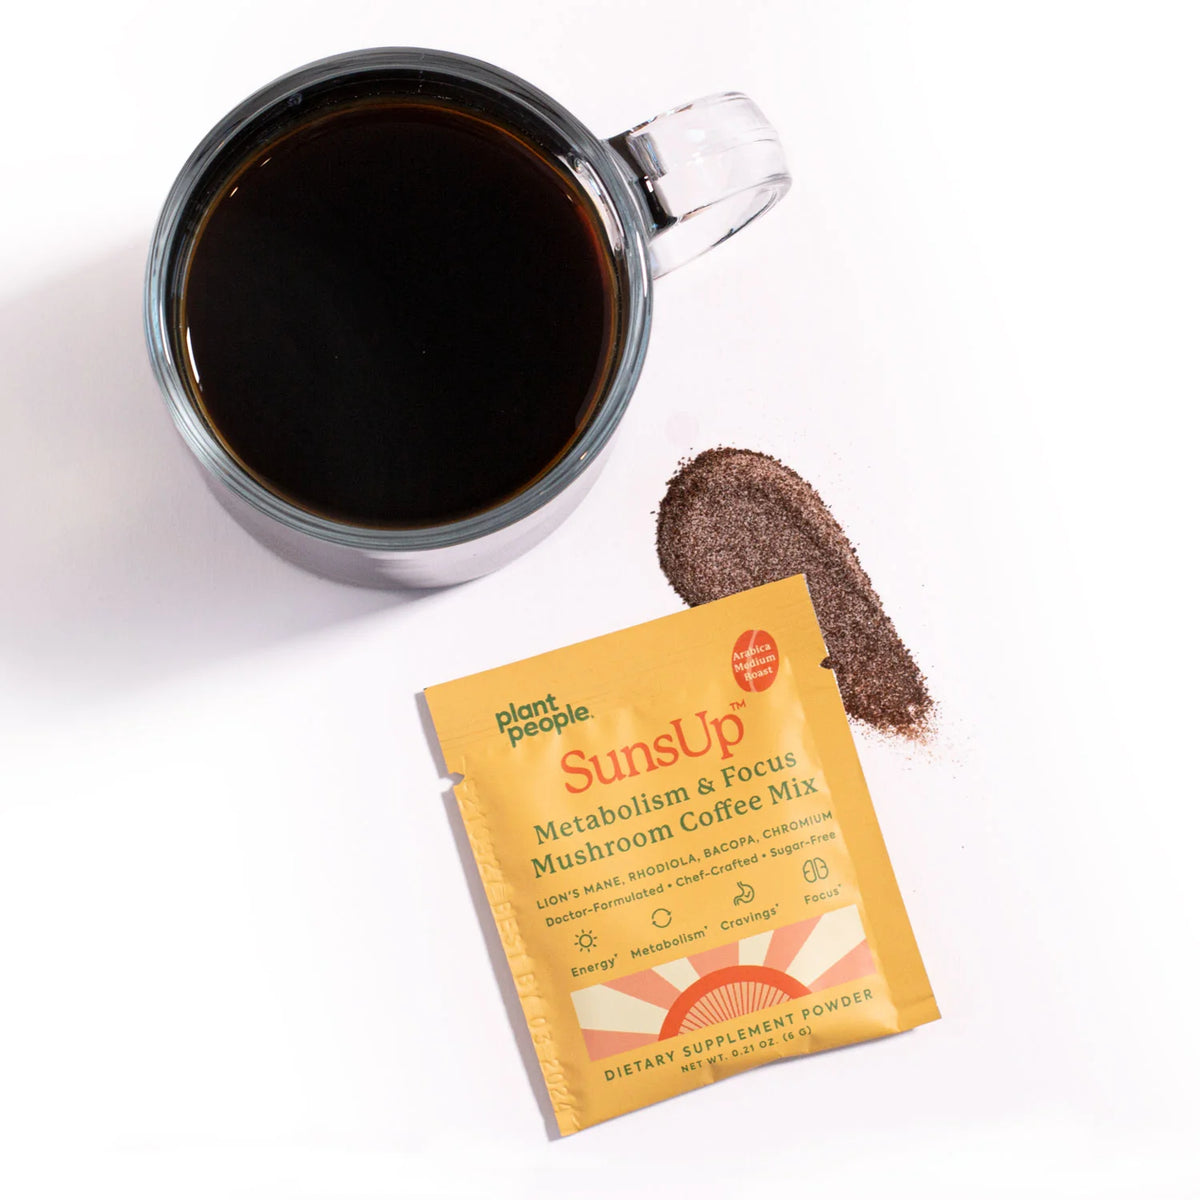 SunsUp - Metabolism &amp; Focus Mushroom Coffee Mix